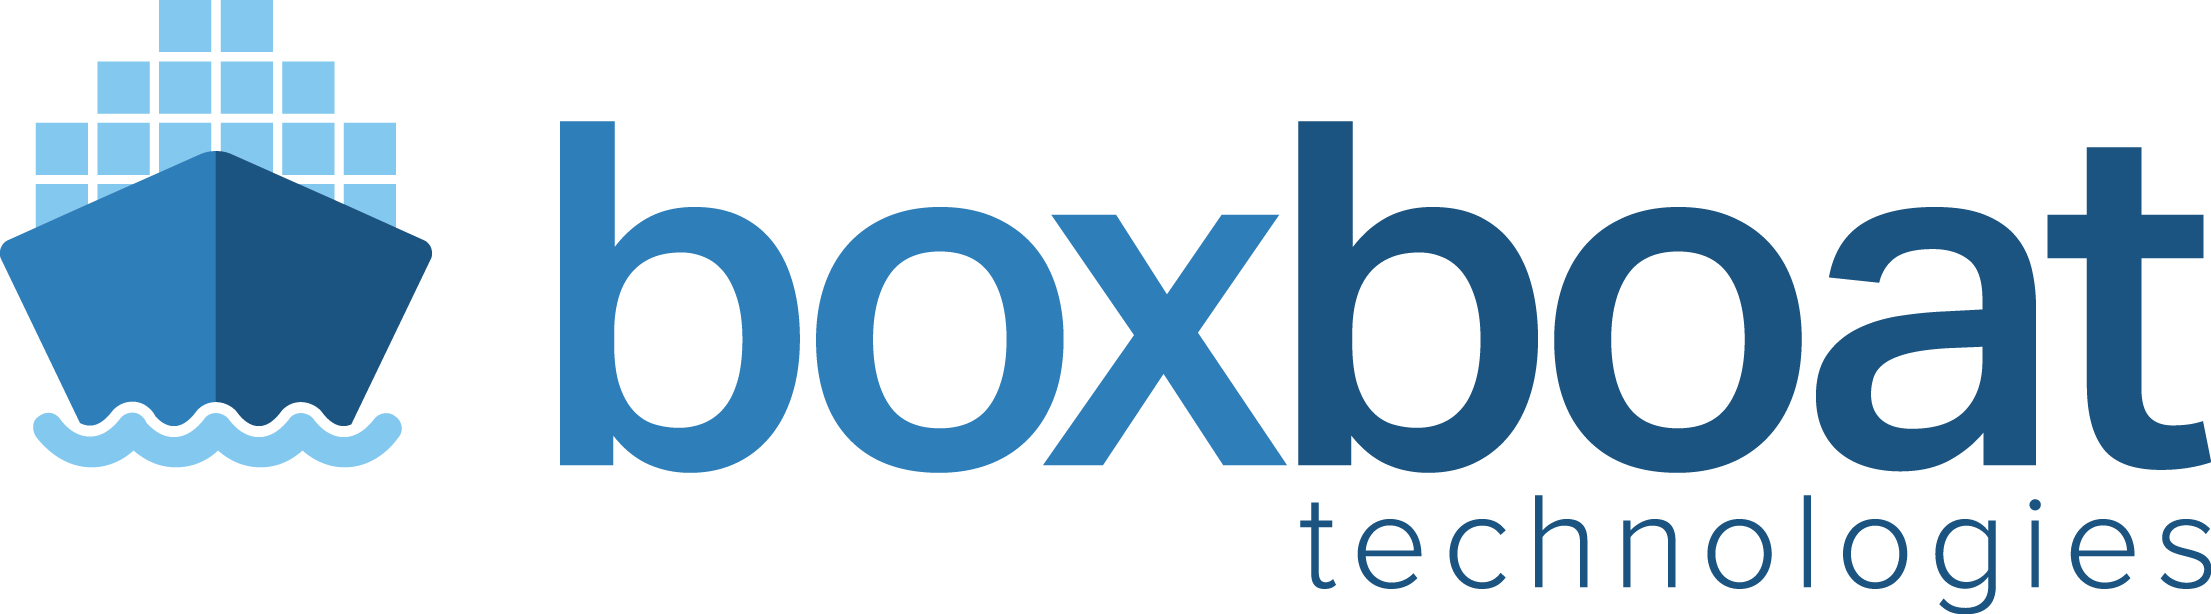 Boxboat Technologies Logo - Full Color - CMYK.png